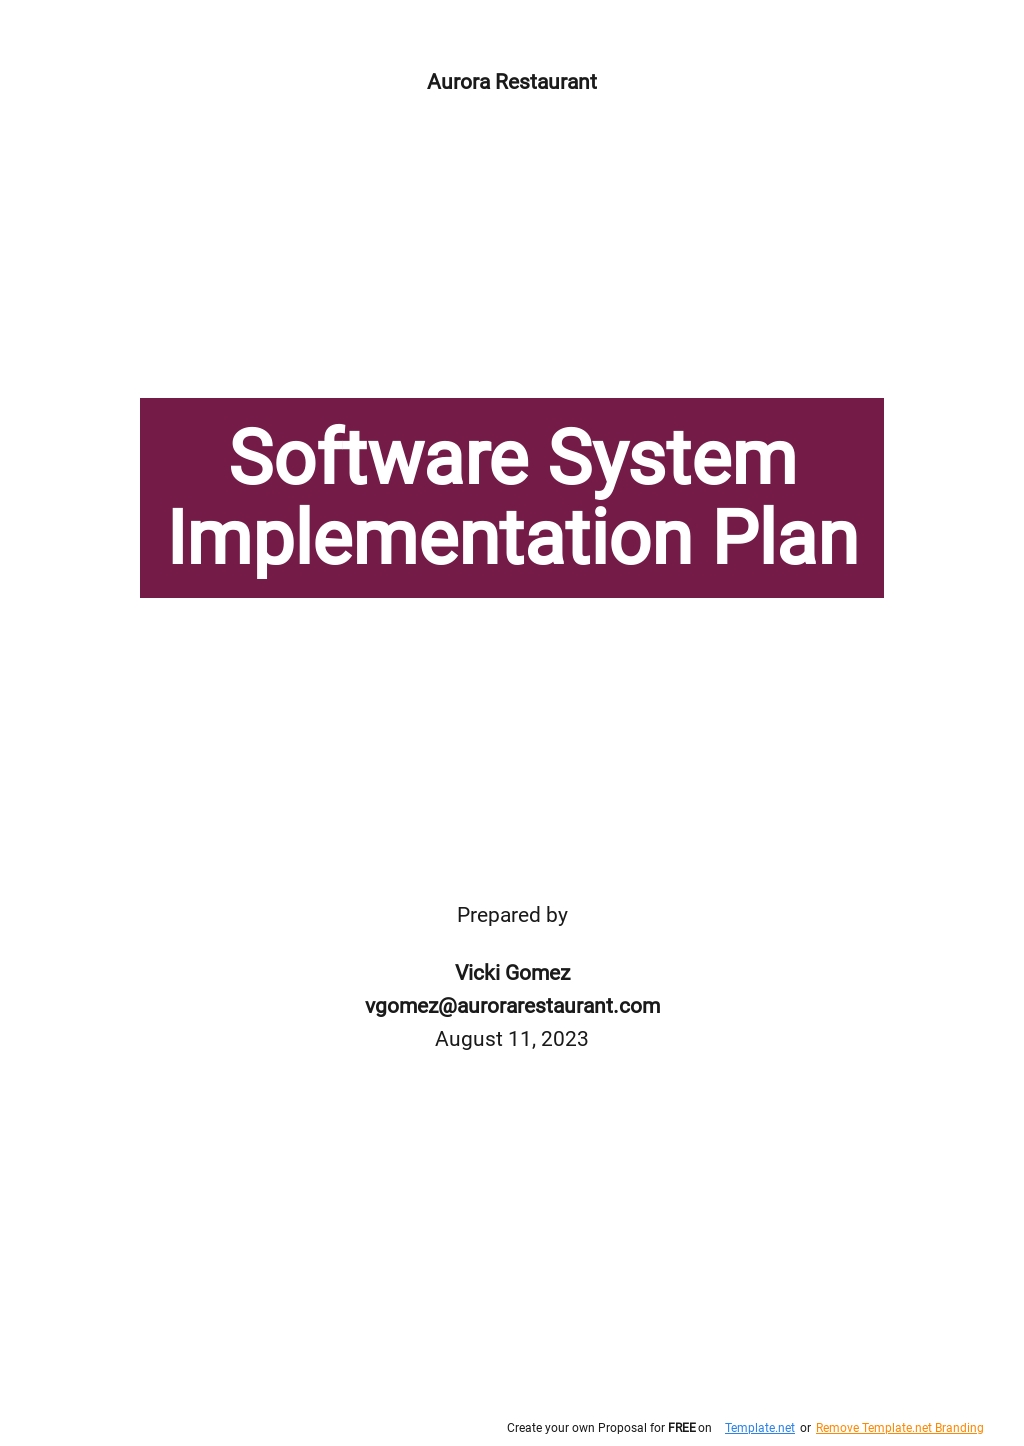 Software System Implementation Plan Template.jpe